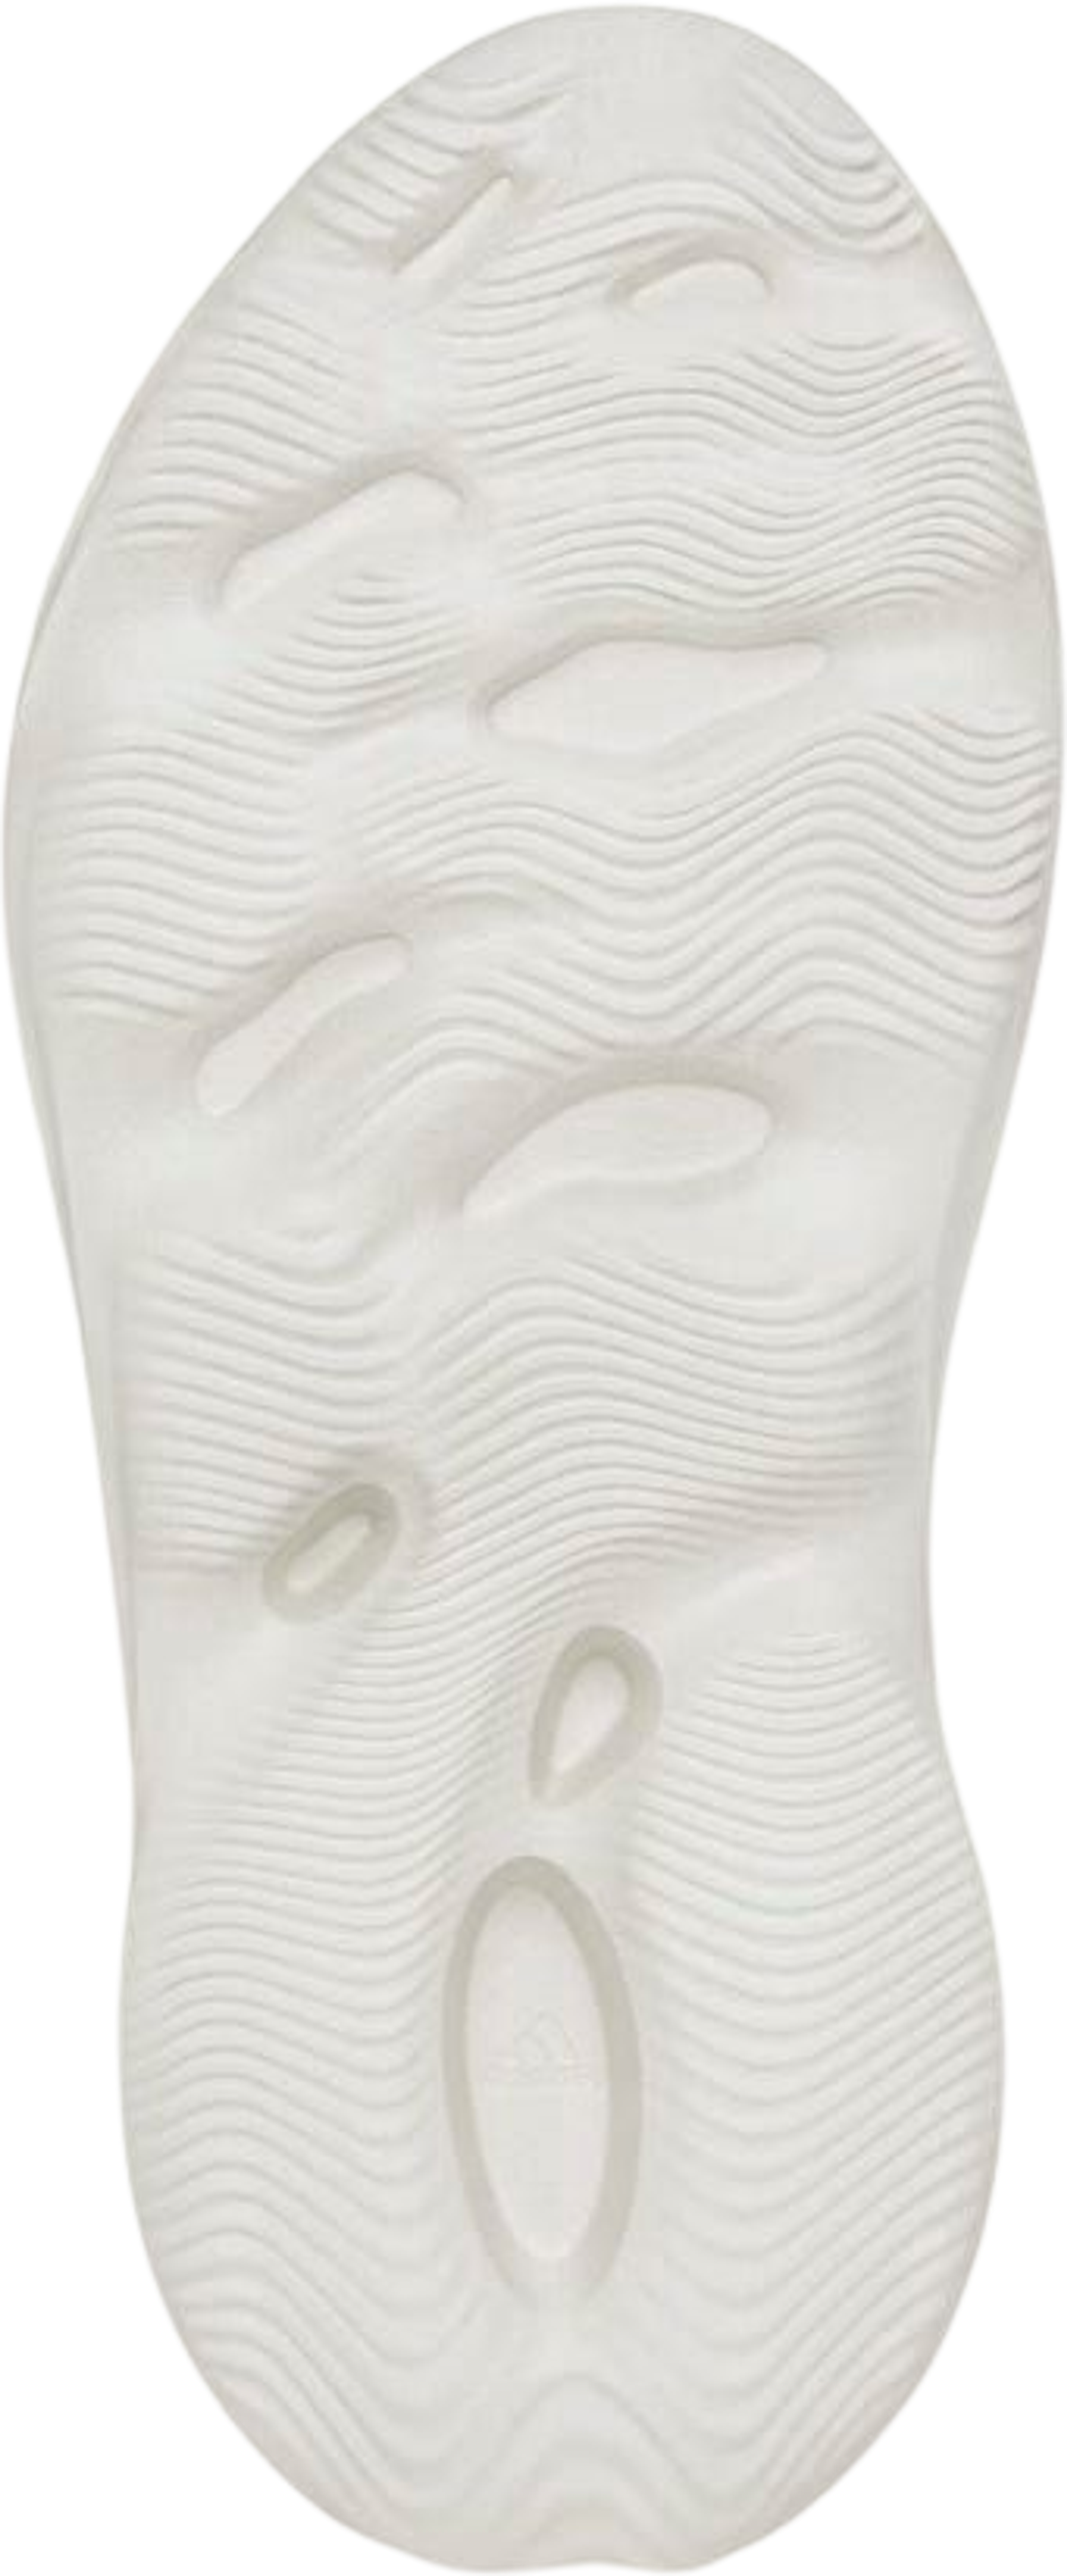 adidas Yeezy Foam Runner Sand Restock